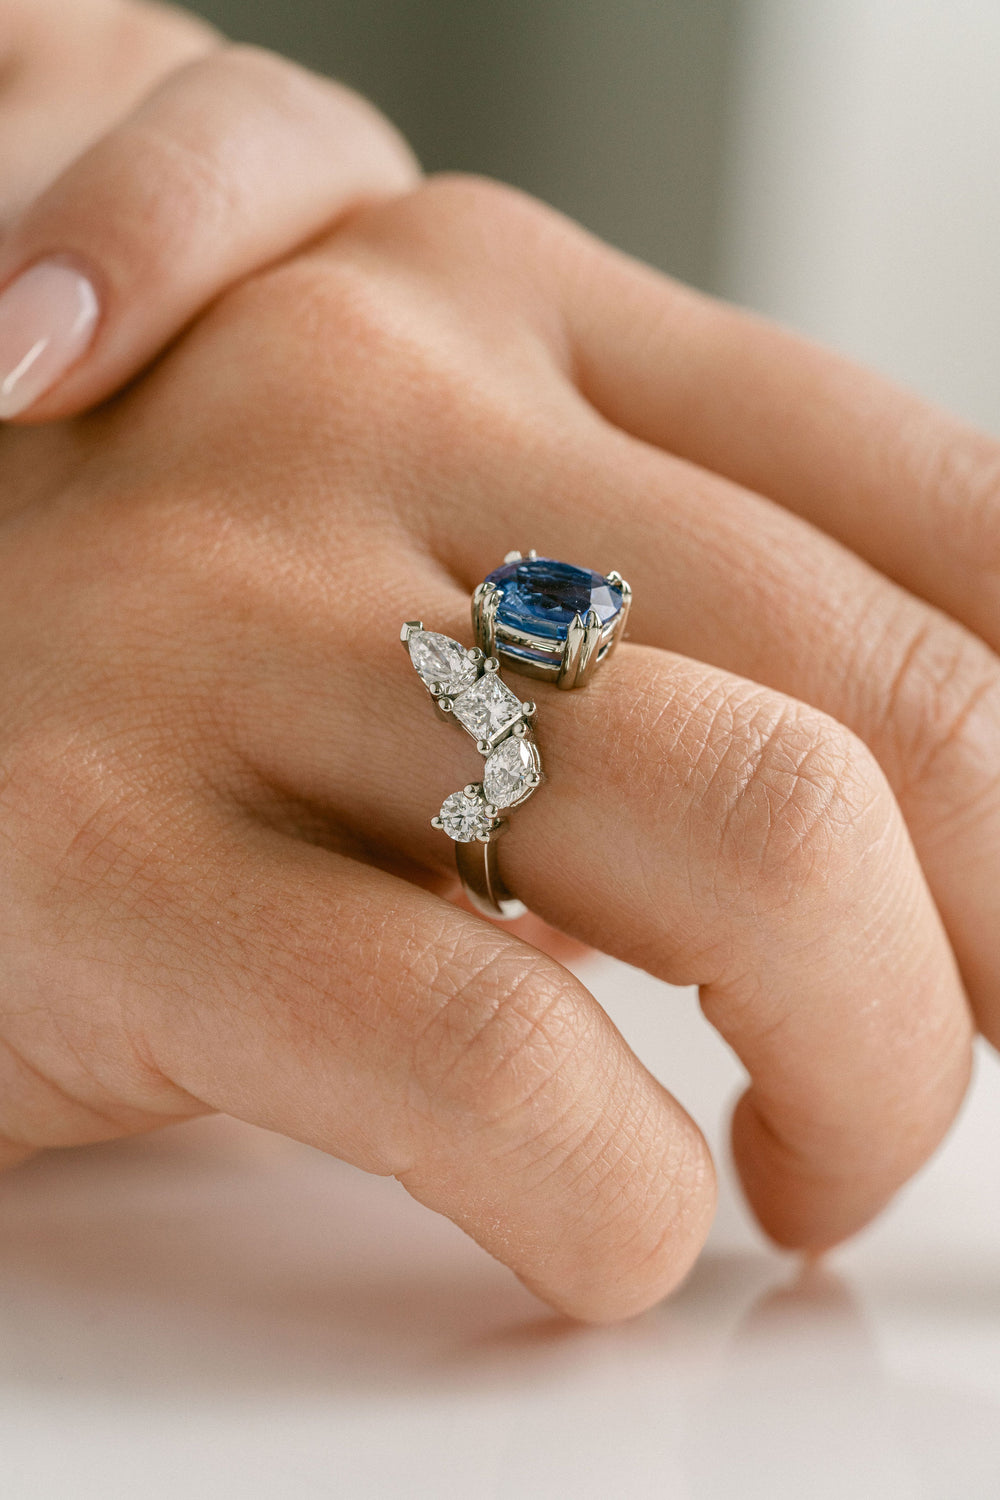 Cushion Cut Blue Sri Lankan Sapphire Gap Ring With Diamonds, 14k White Gold